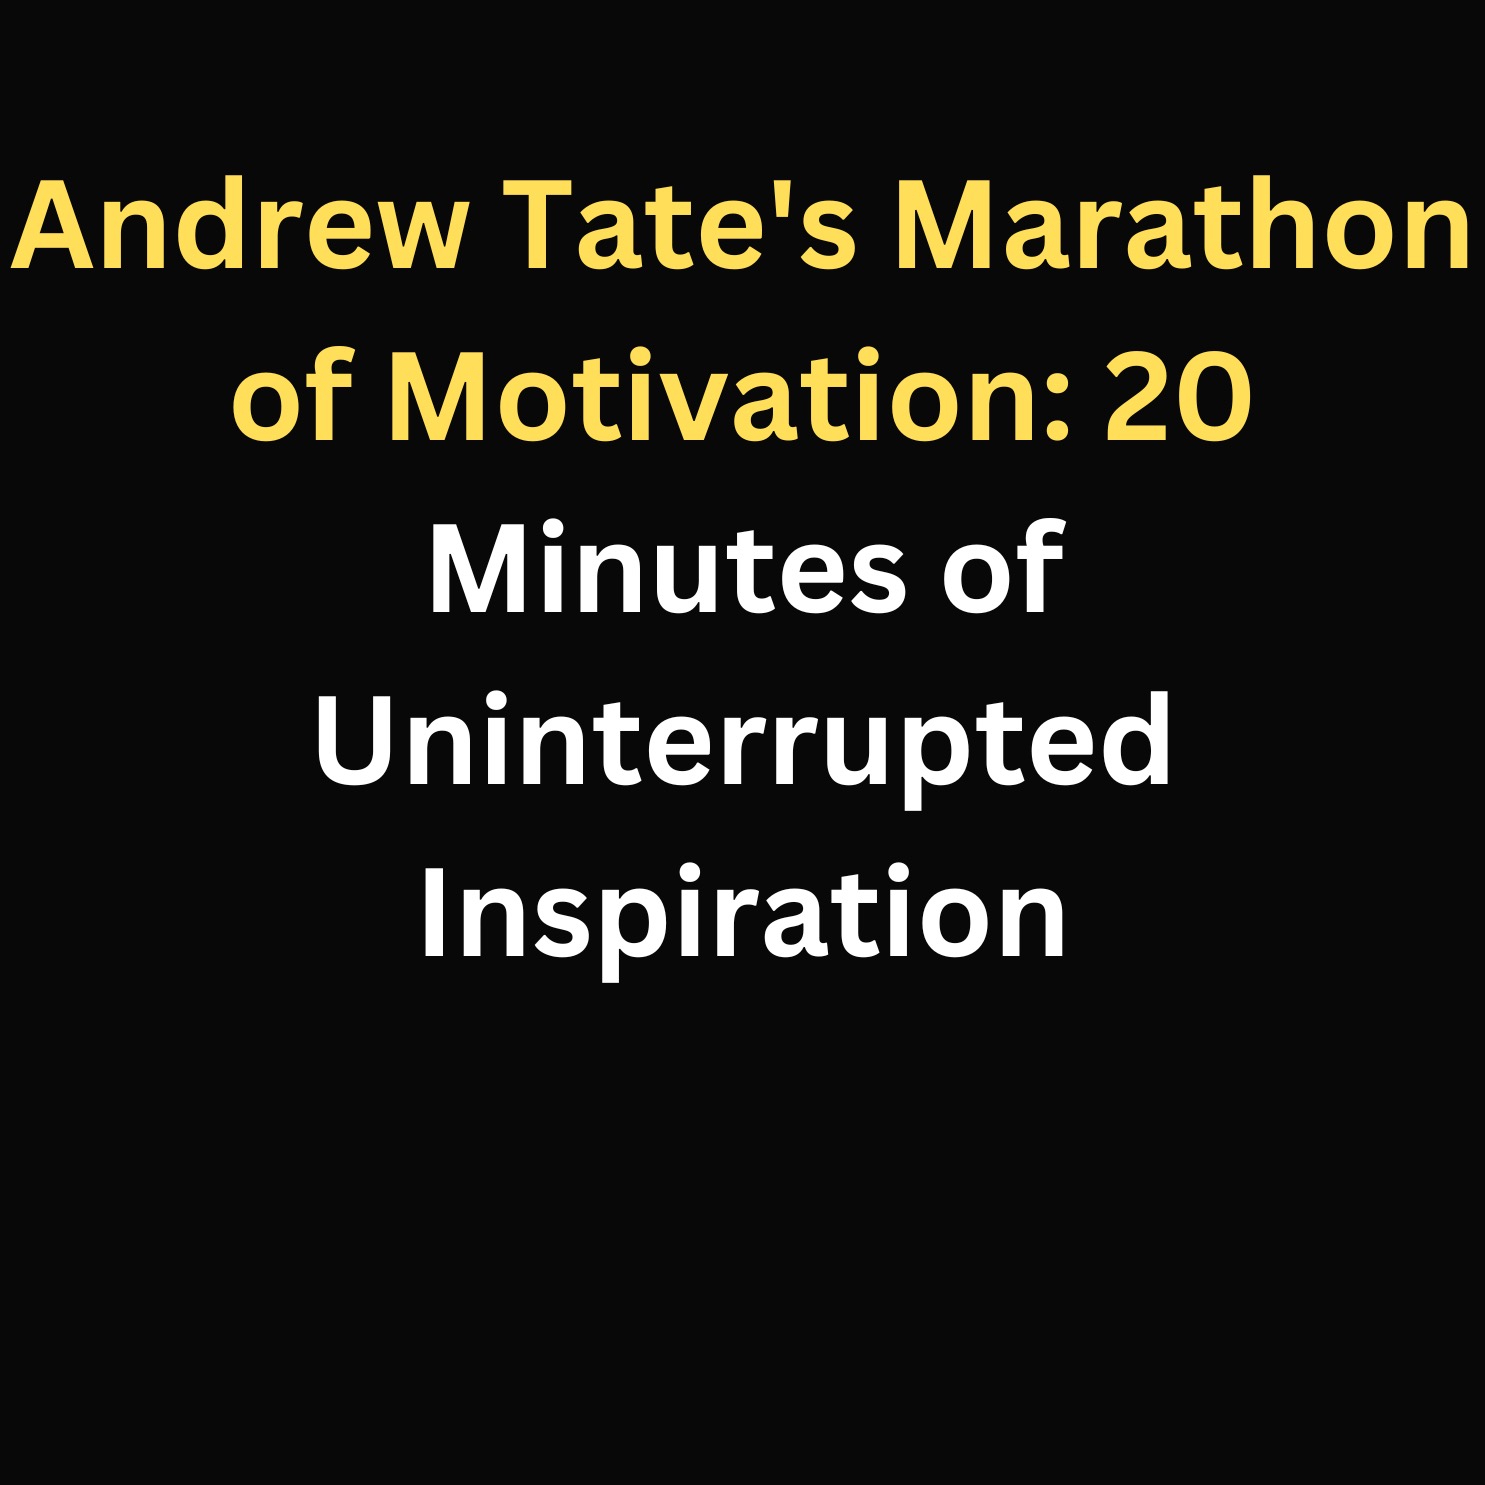 Andrew Tate's Marathon of Motivation: 20 Minutes of Uninterrupted Inspiration